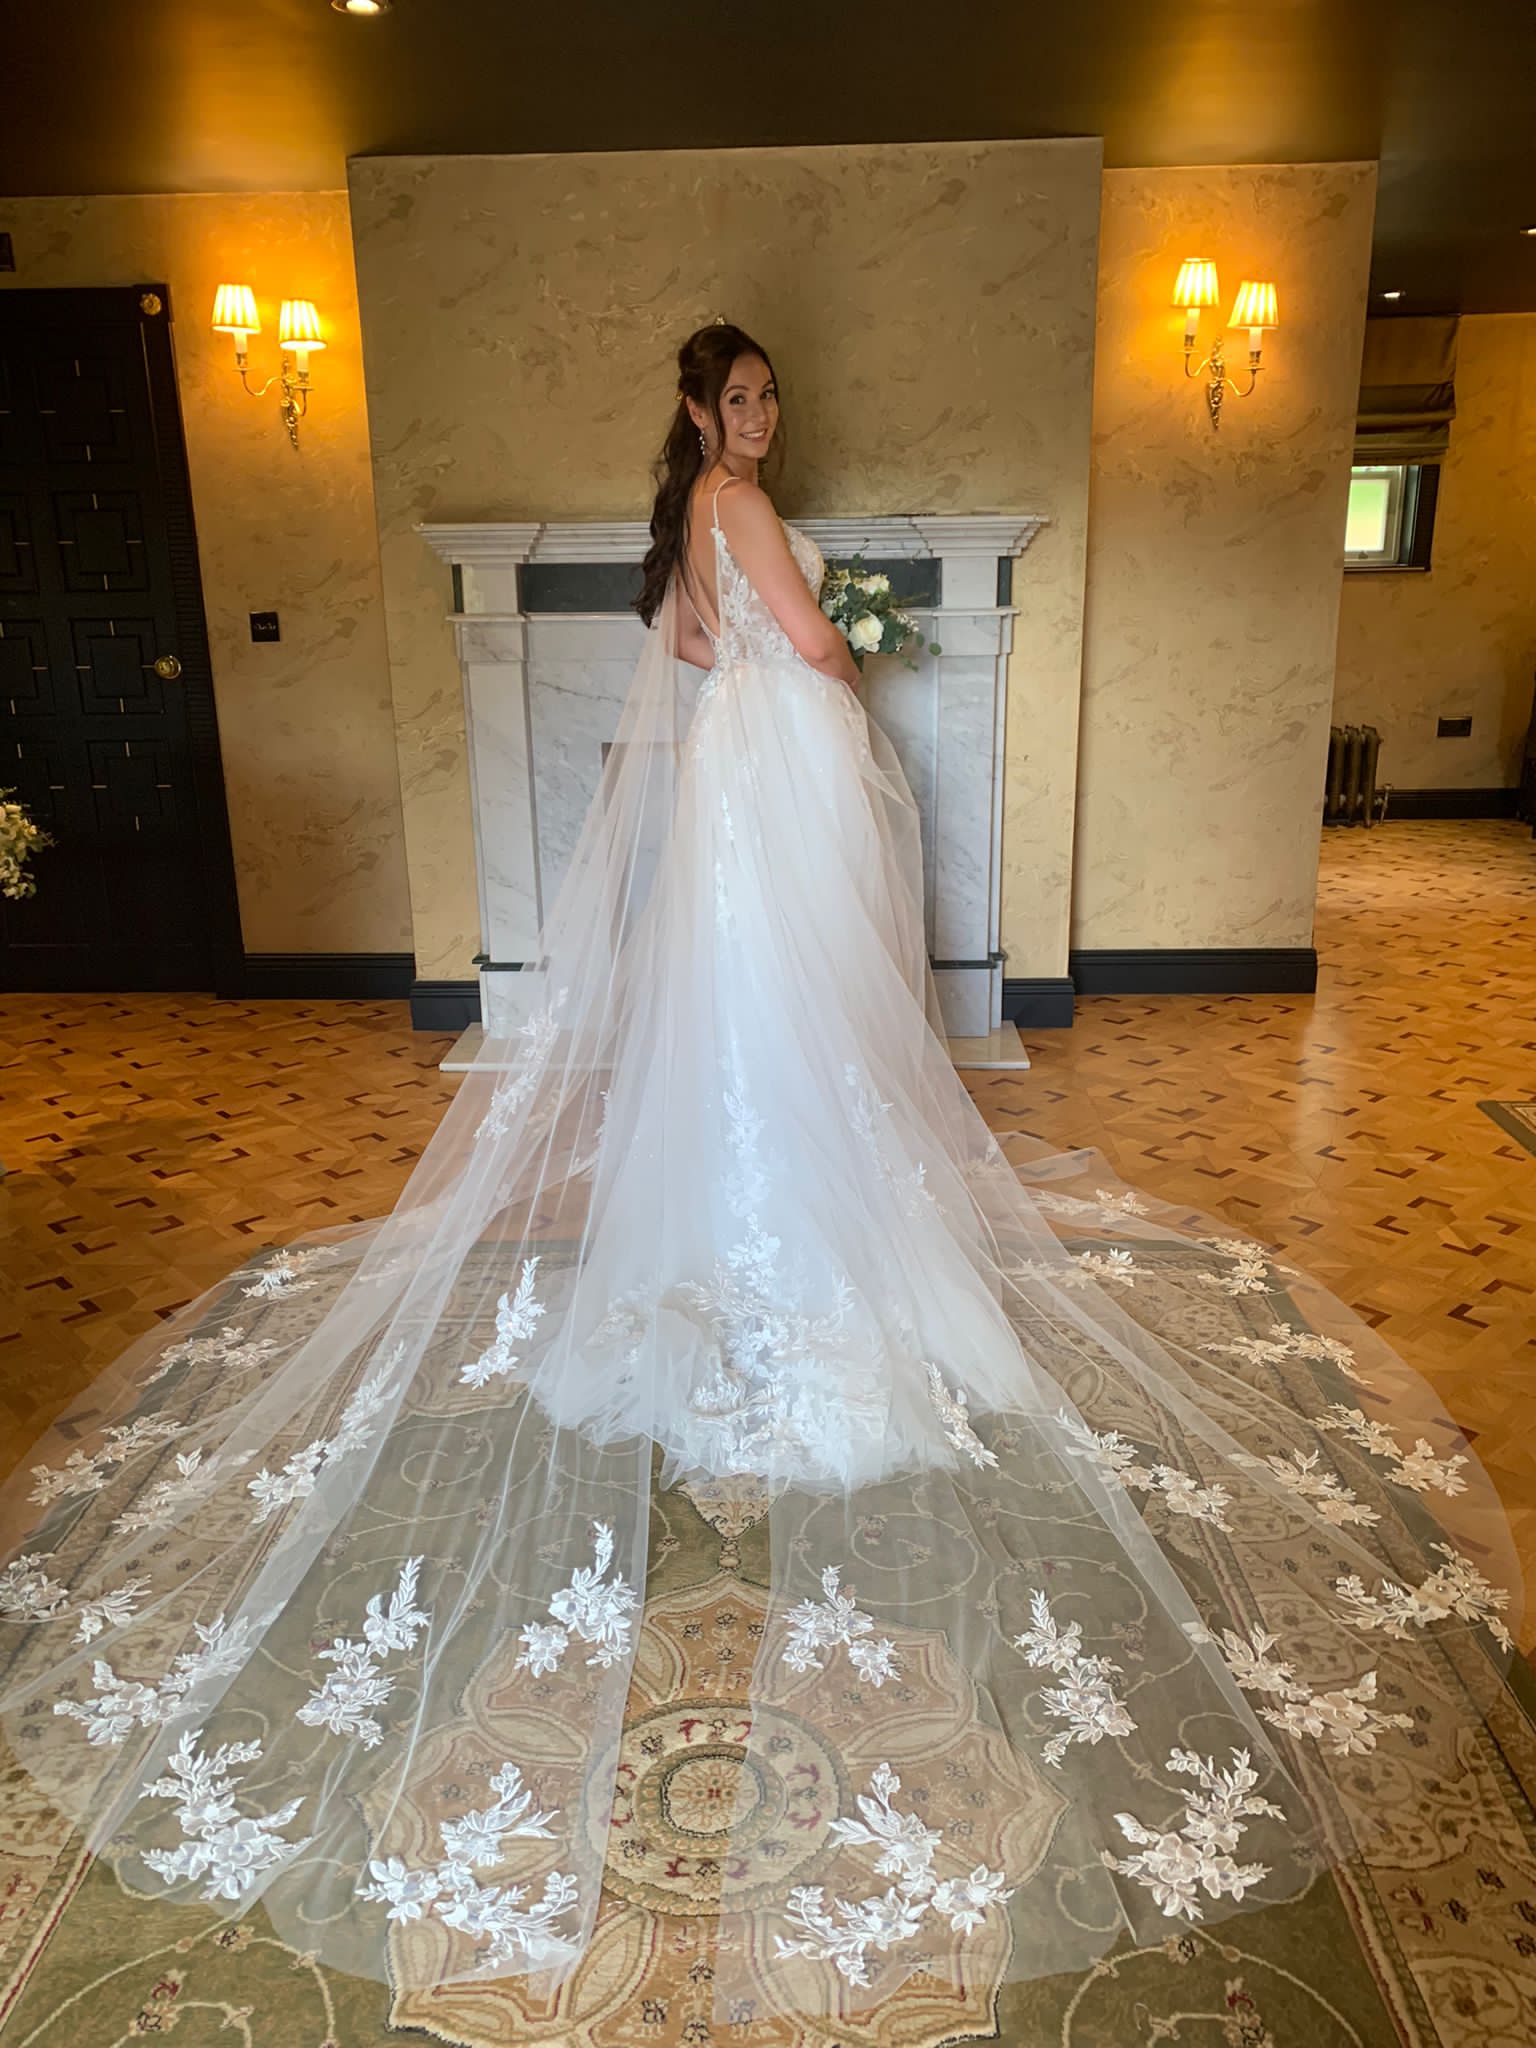 Pippa chose the wedding dress Oleesa by Blue By Enzoani  